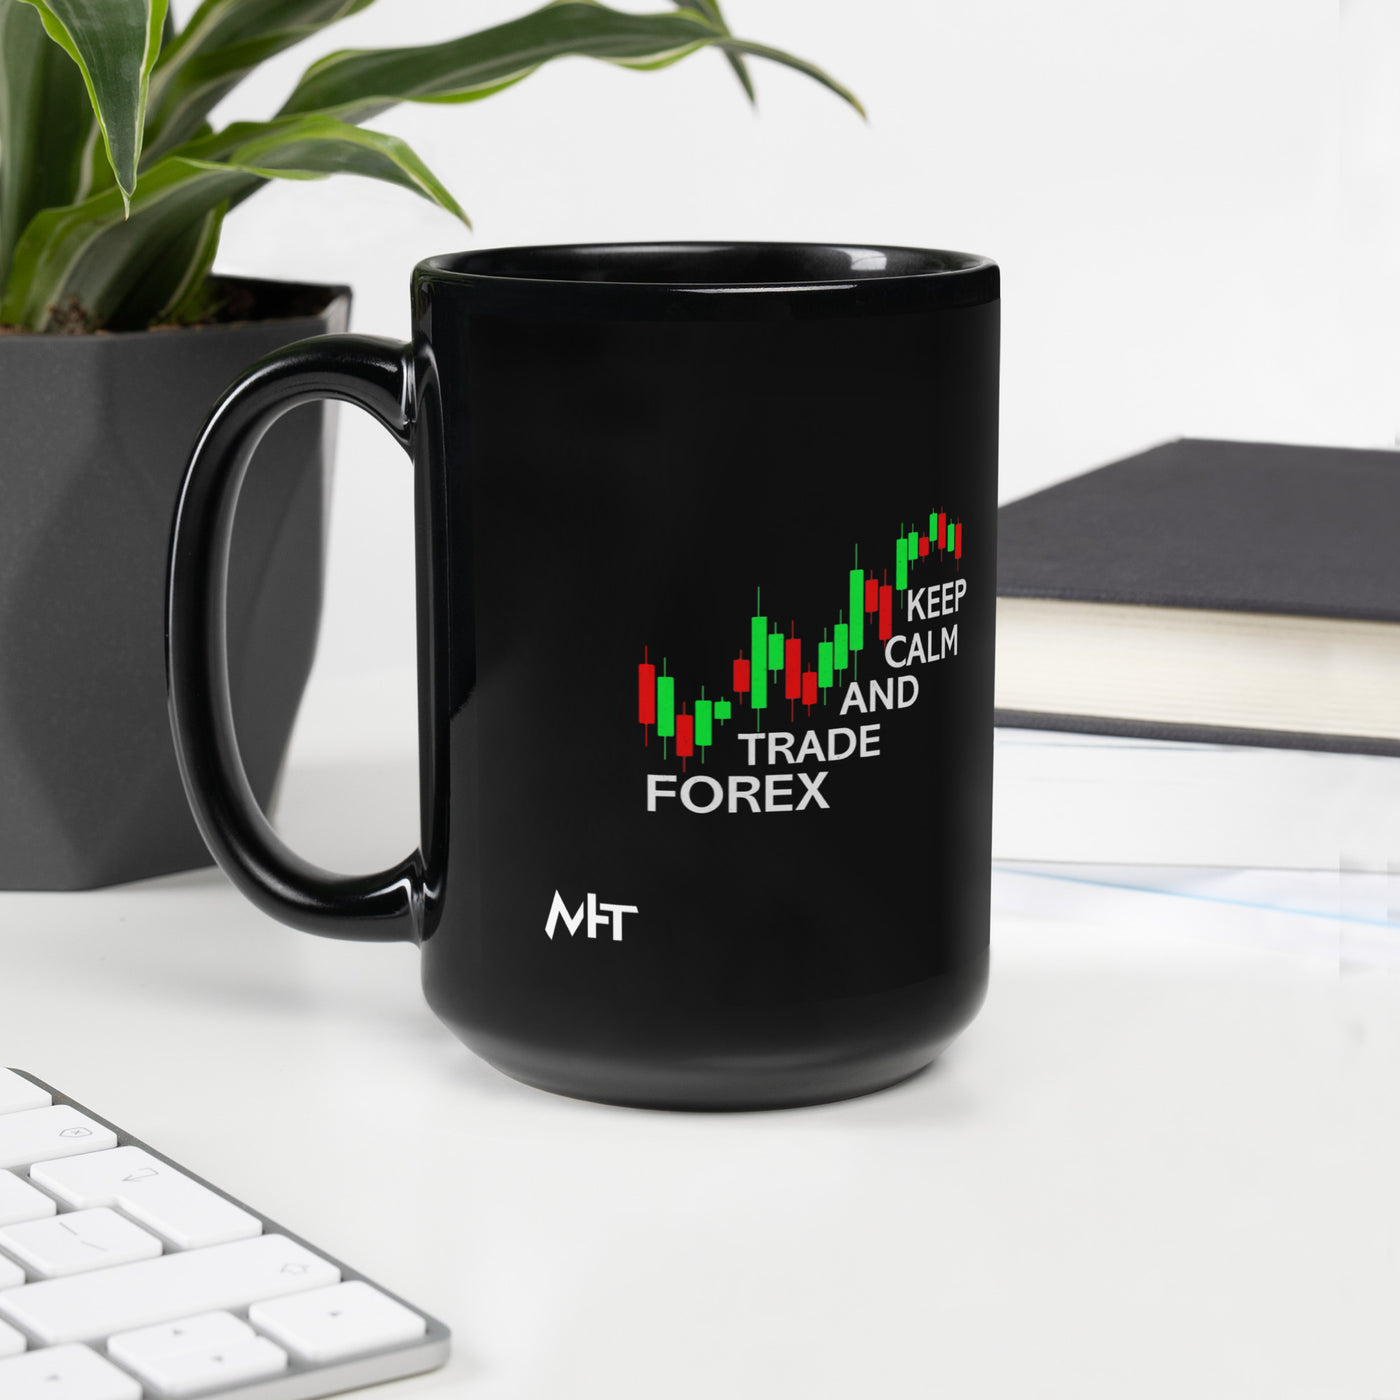 Keep Calm and Trade Forex - Black Glossy Mug